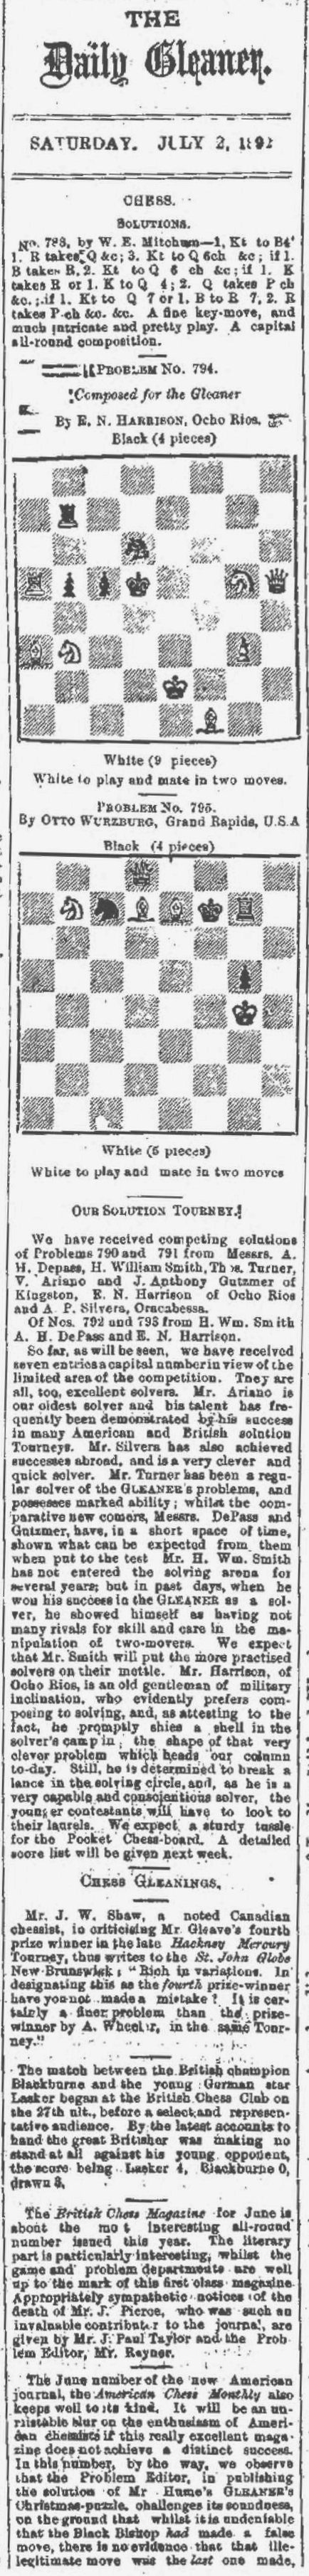 1892.07.02-01 Kingston Daily Gleaner.png